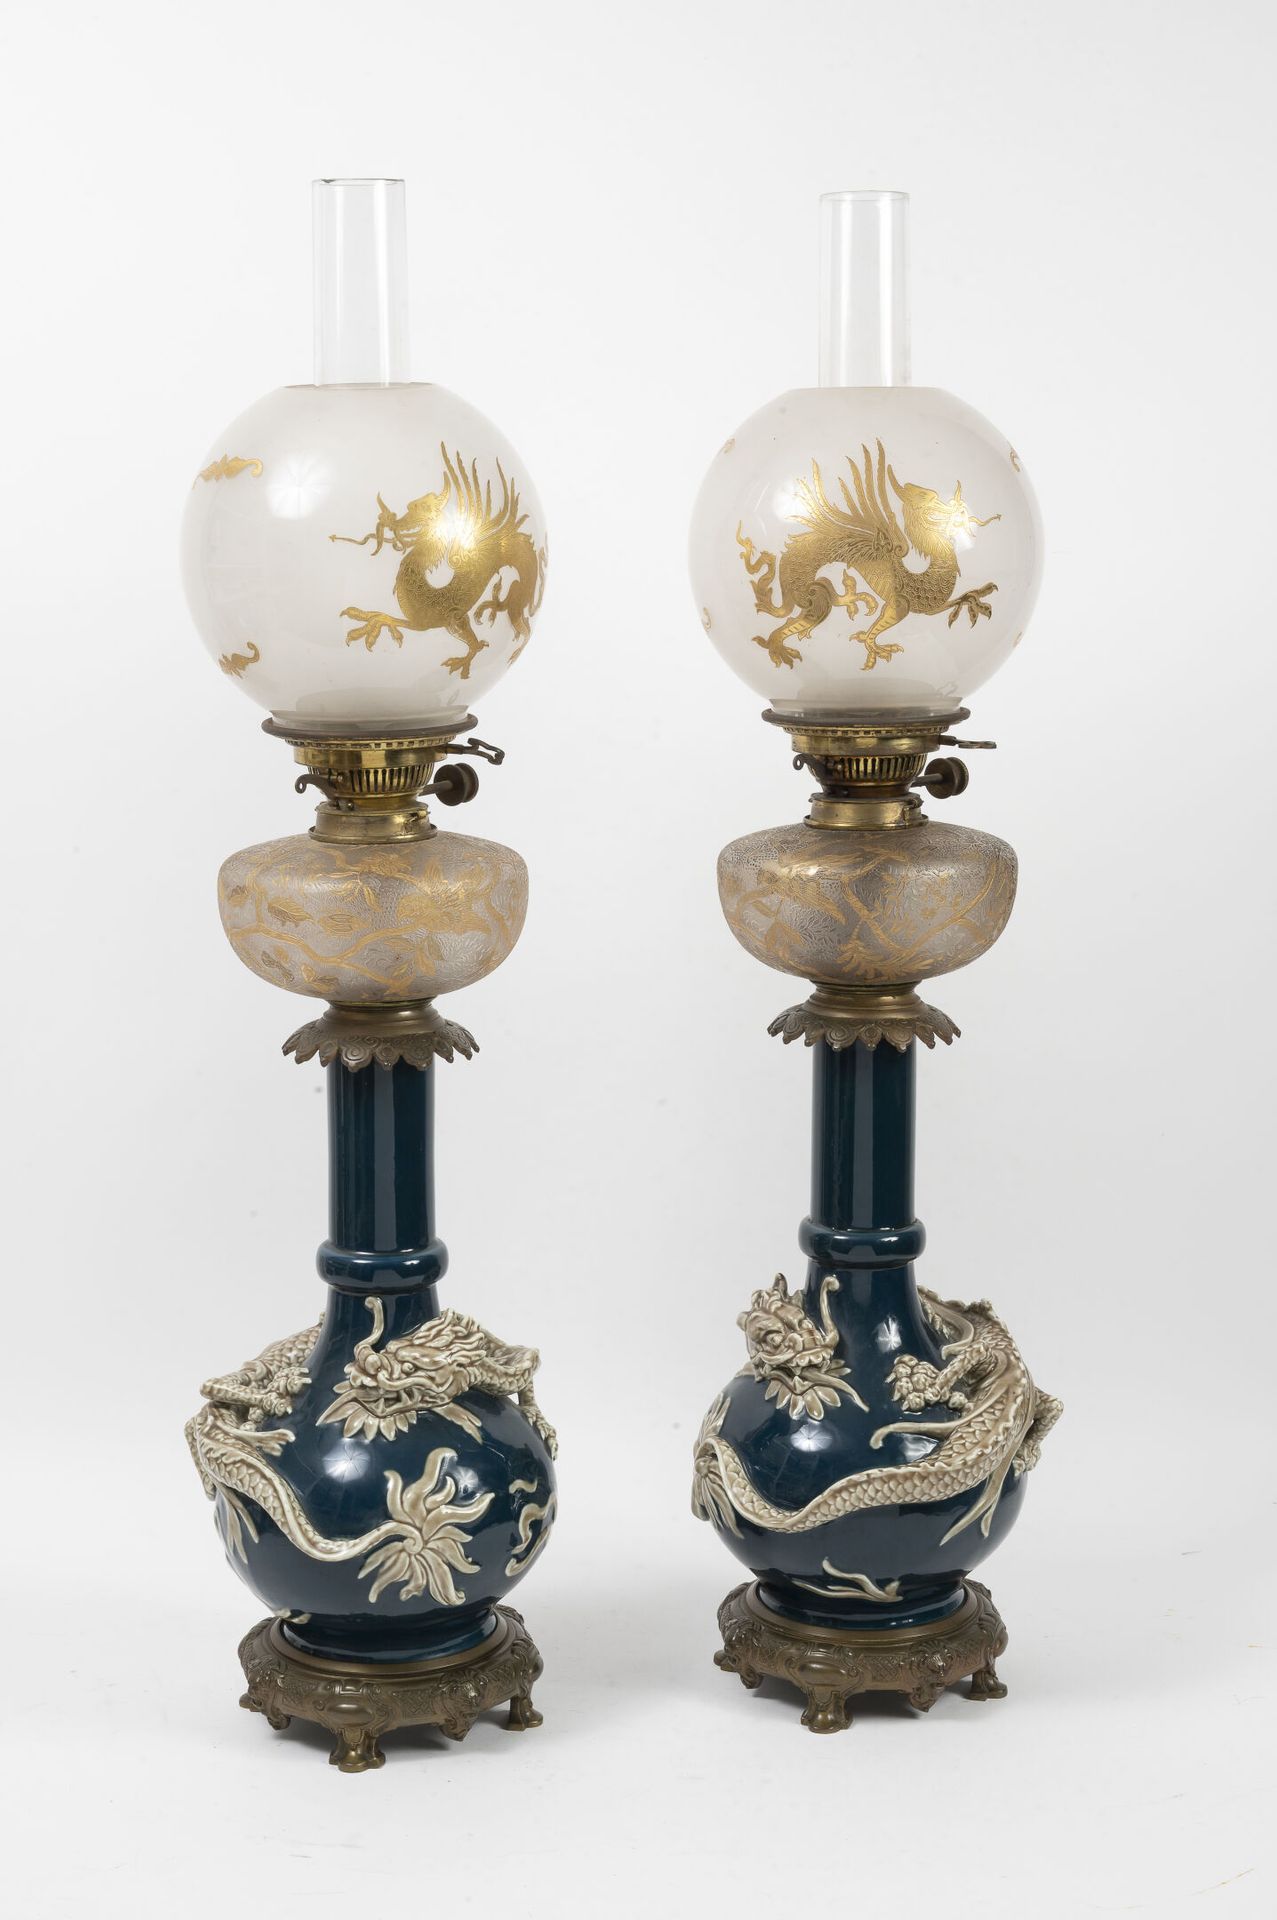 Null 一对蓝色和米色的陶瓷油灯，有龙的装饰。

有龙的球状物。

有镀金鸟的水库。

19世纪。

H.83厘米。

杯子上的薯片。